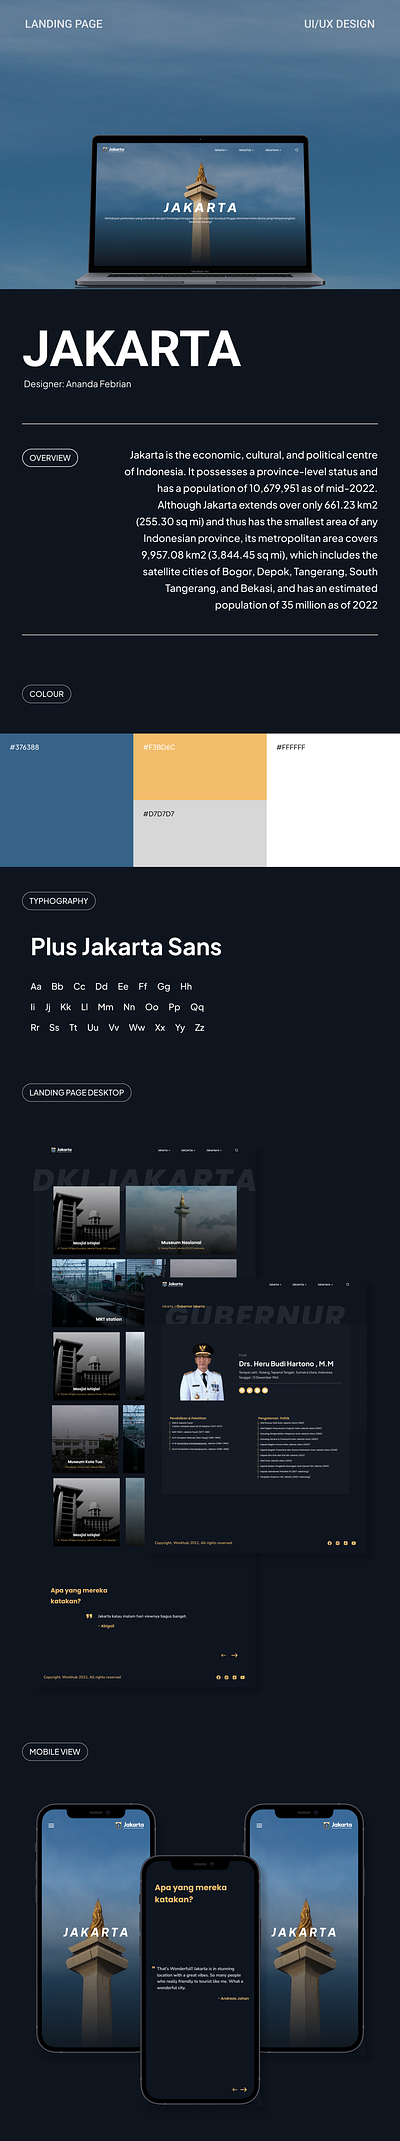 Jakarta's Landing Page landing page design uiux design website design